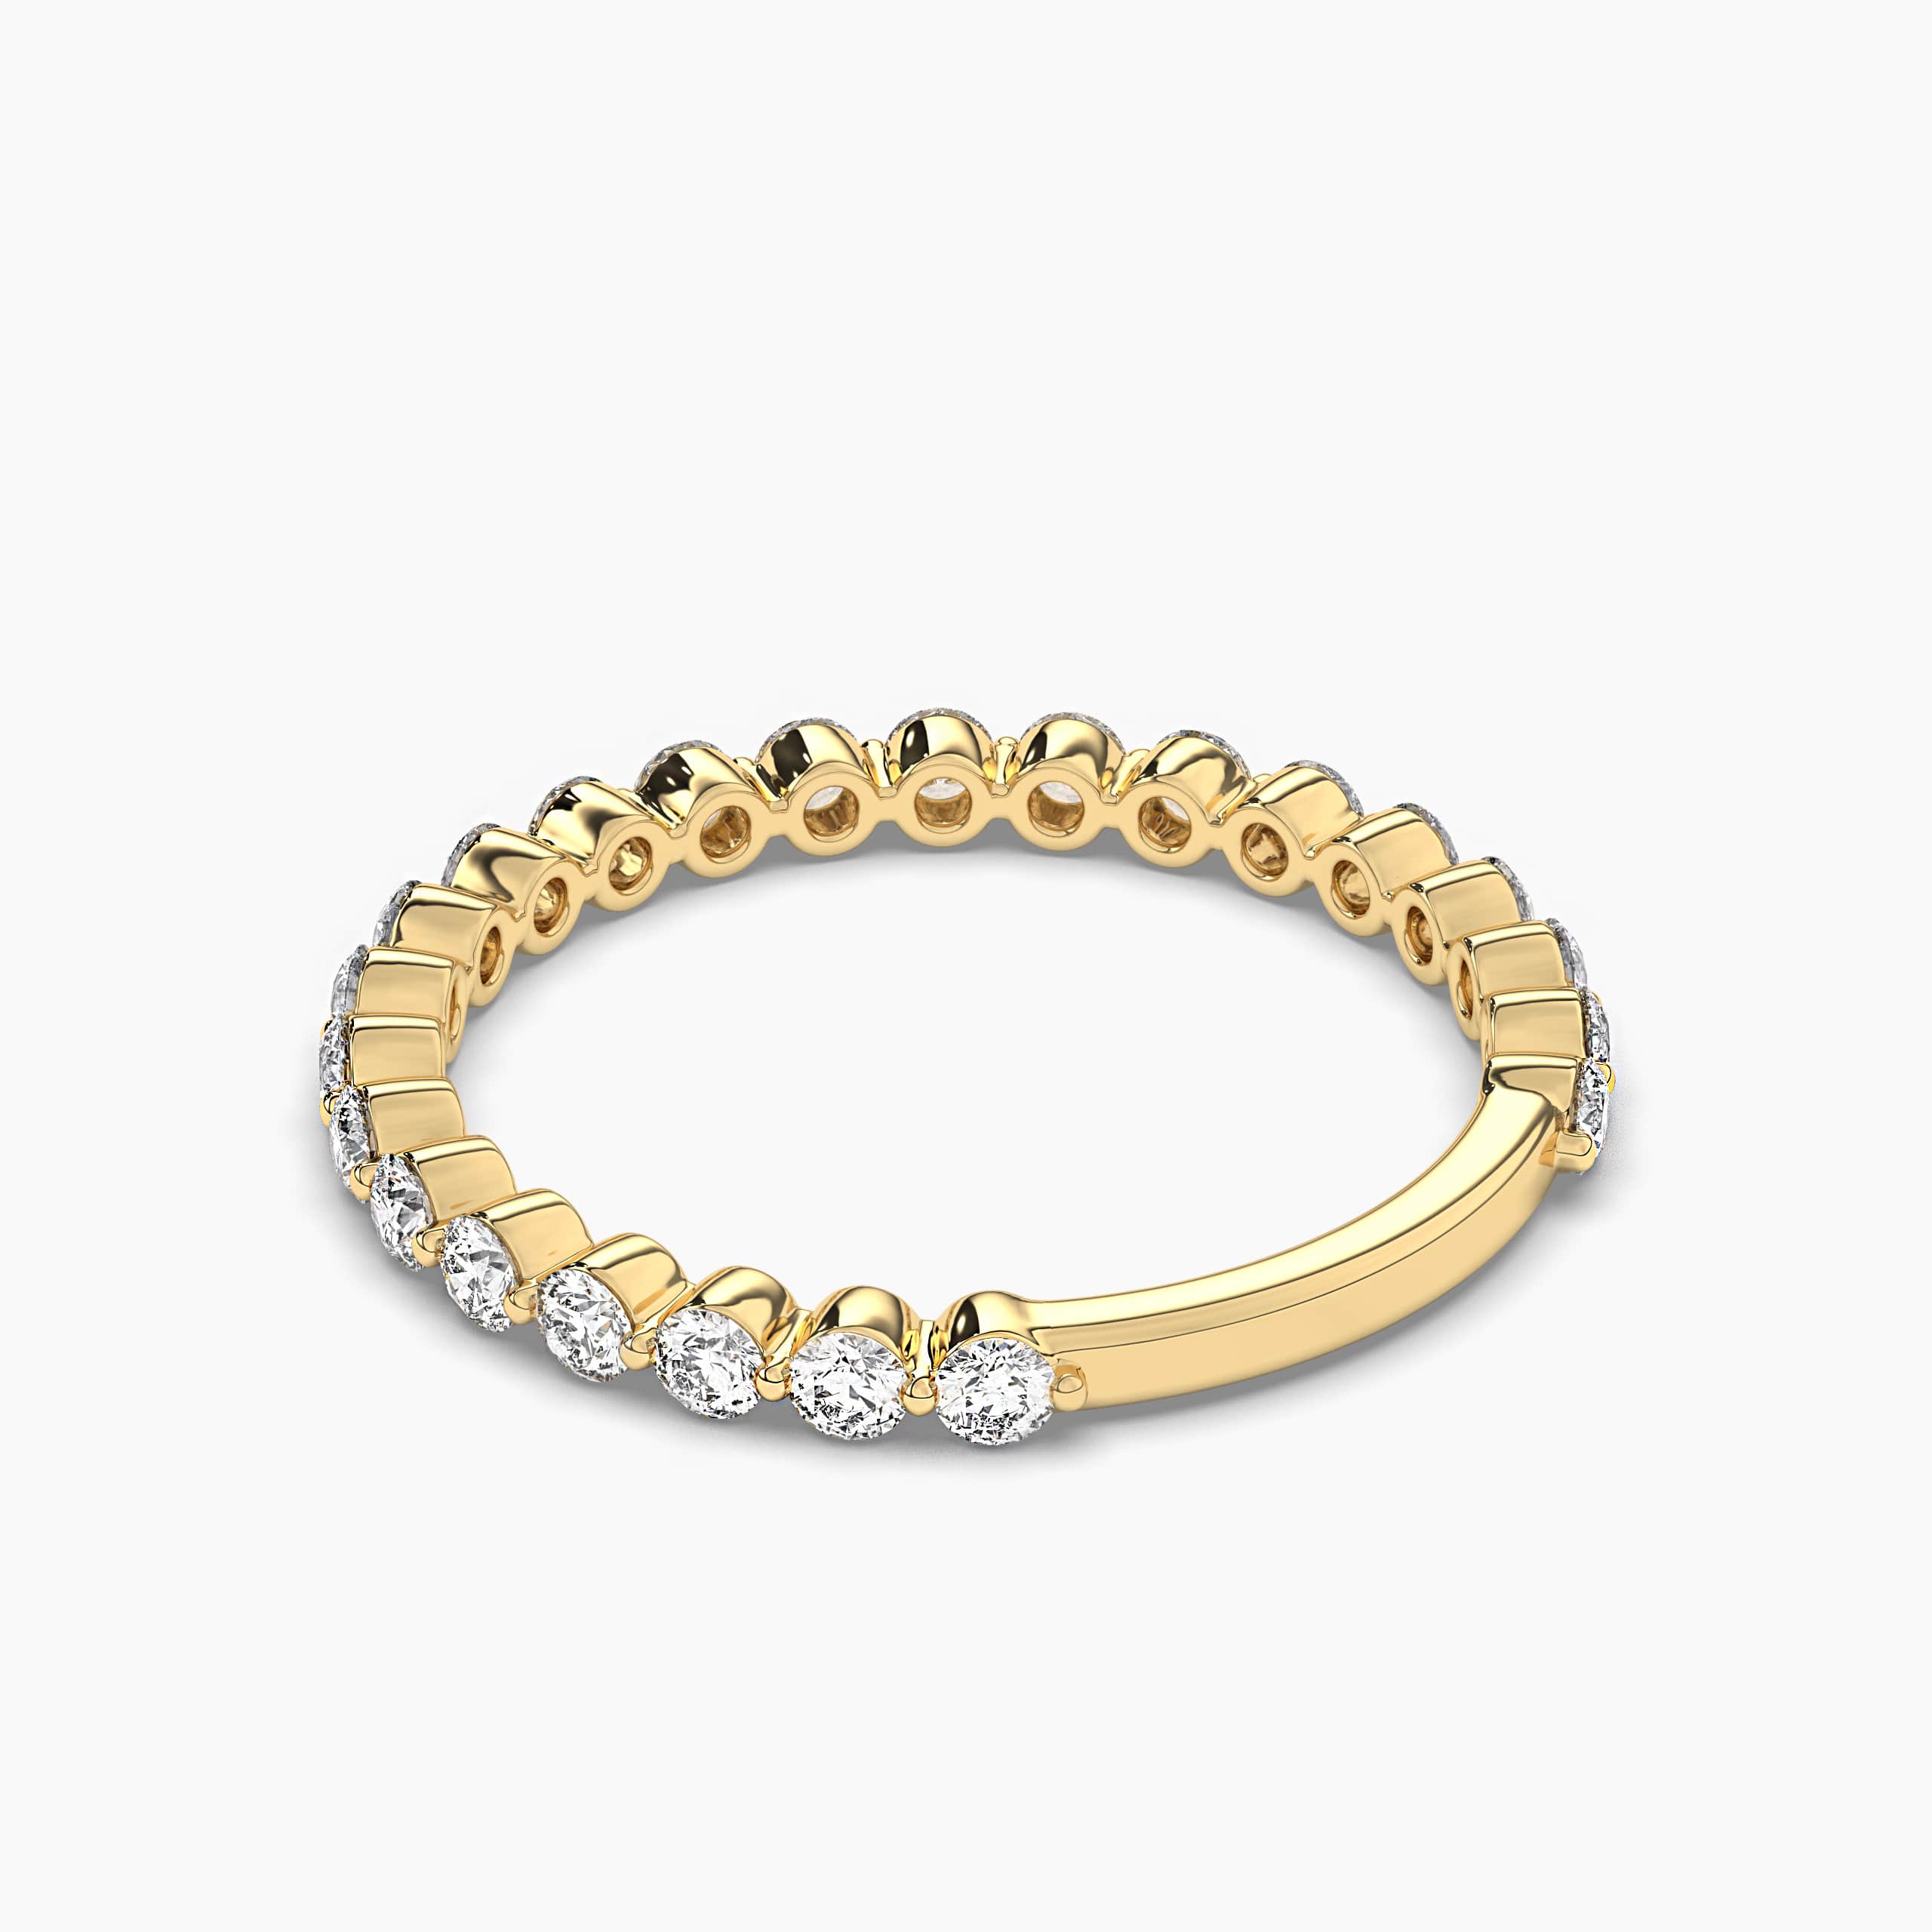 Classy Retro Style Diamond Ring